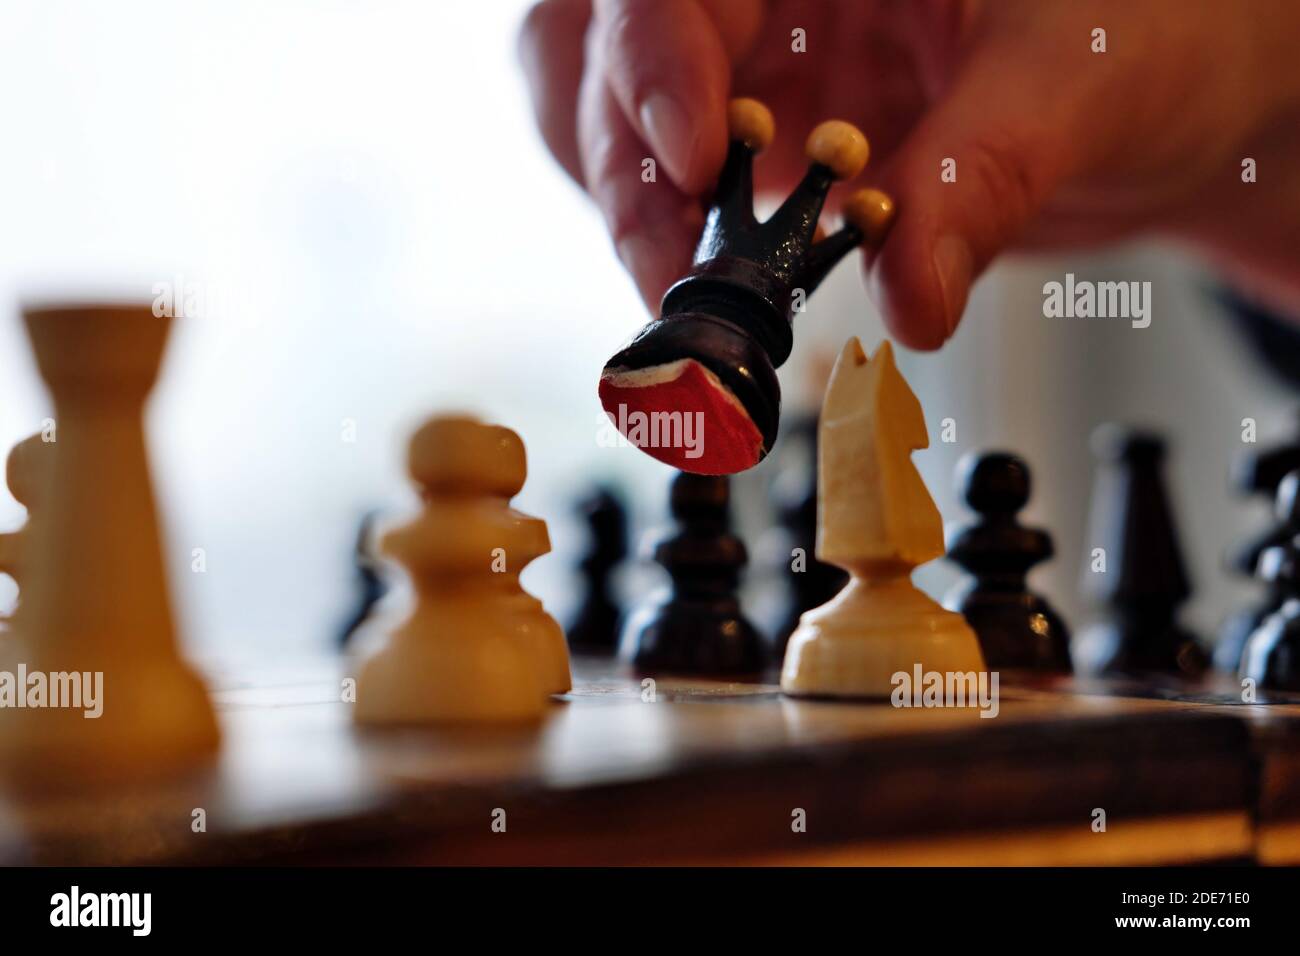 Faby-Chess : Activity •